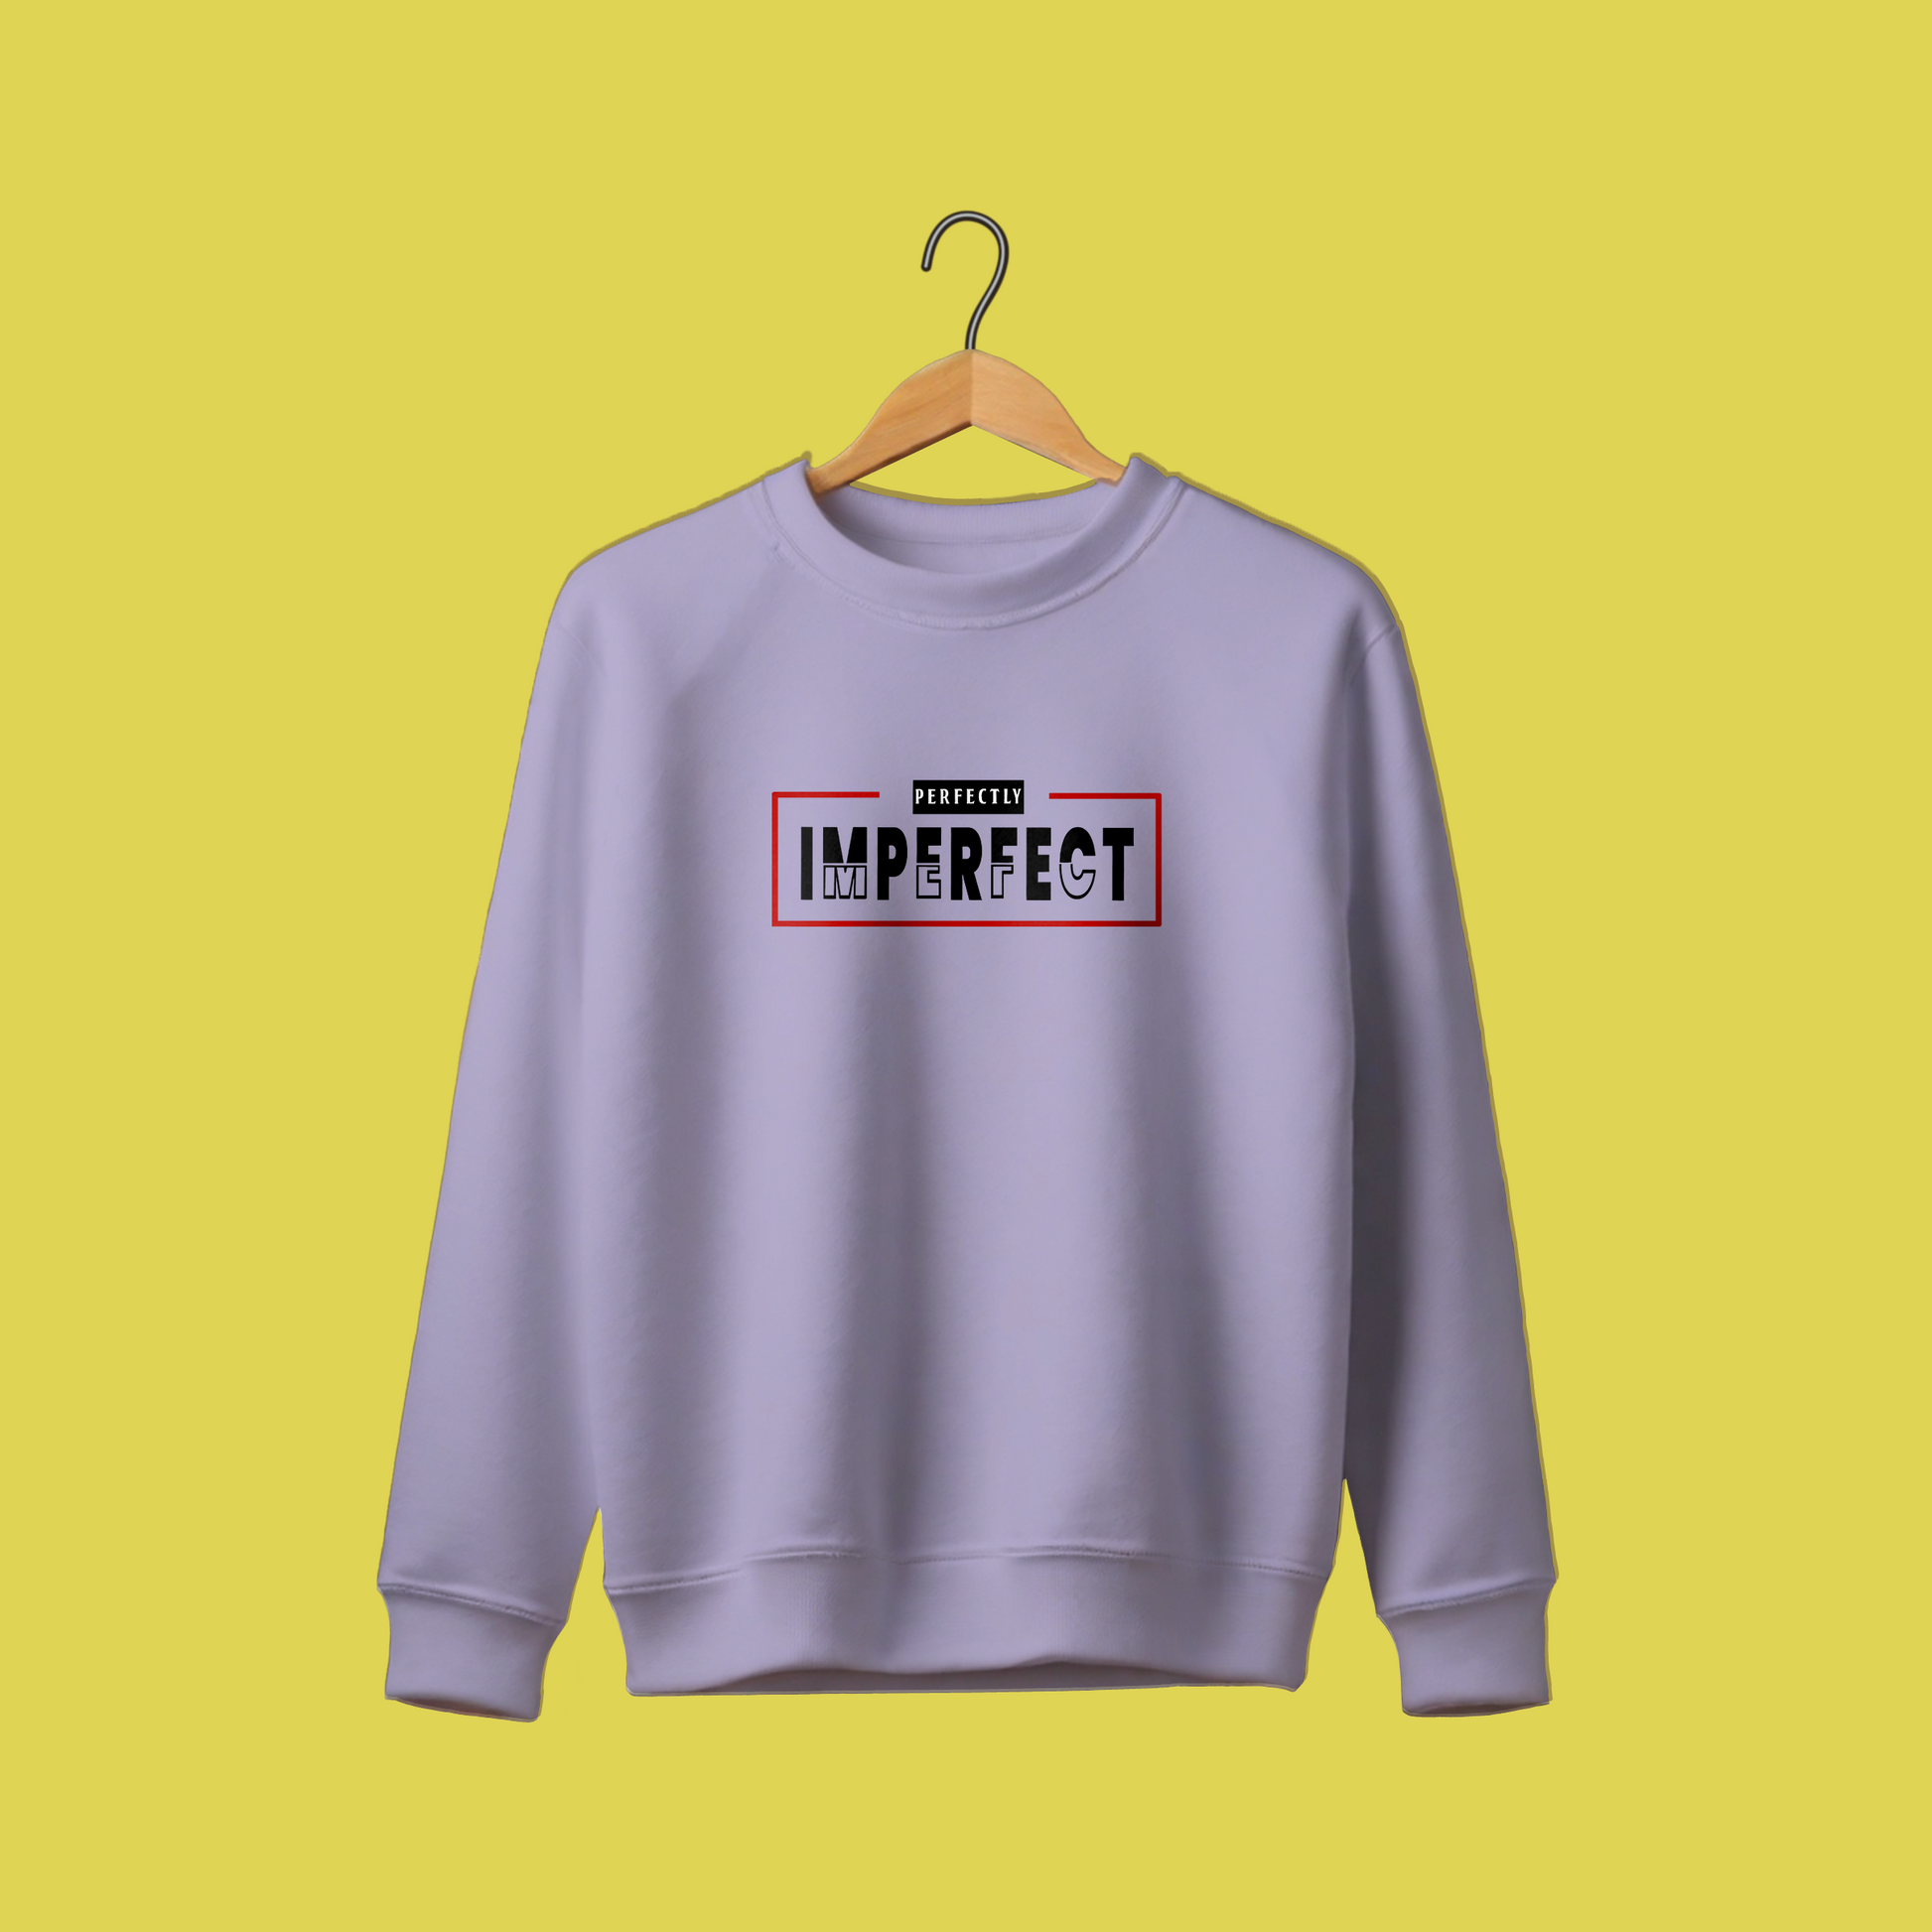 PERFECTLY IMPERFECT - Premium Oversized Sweatshirt